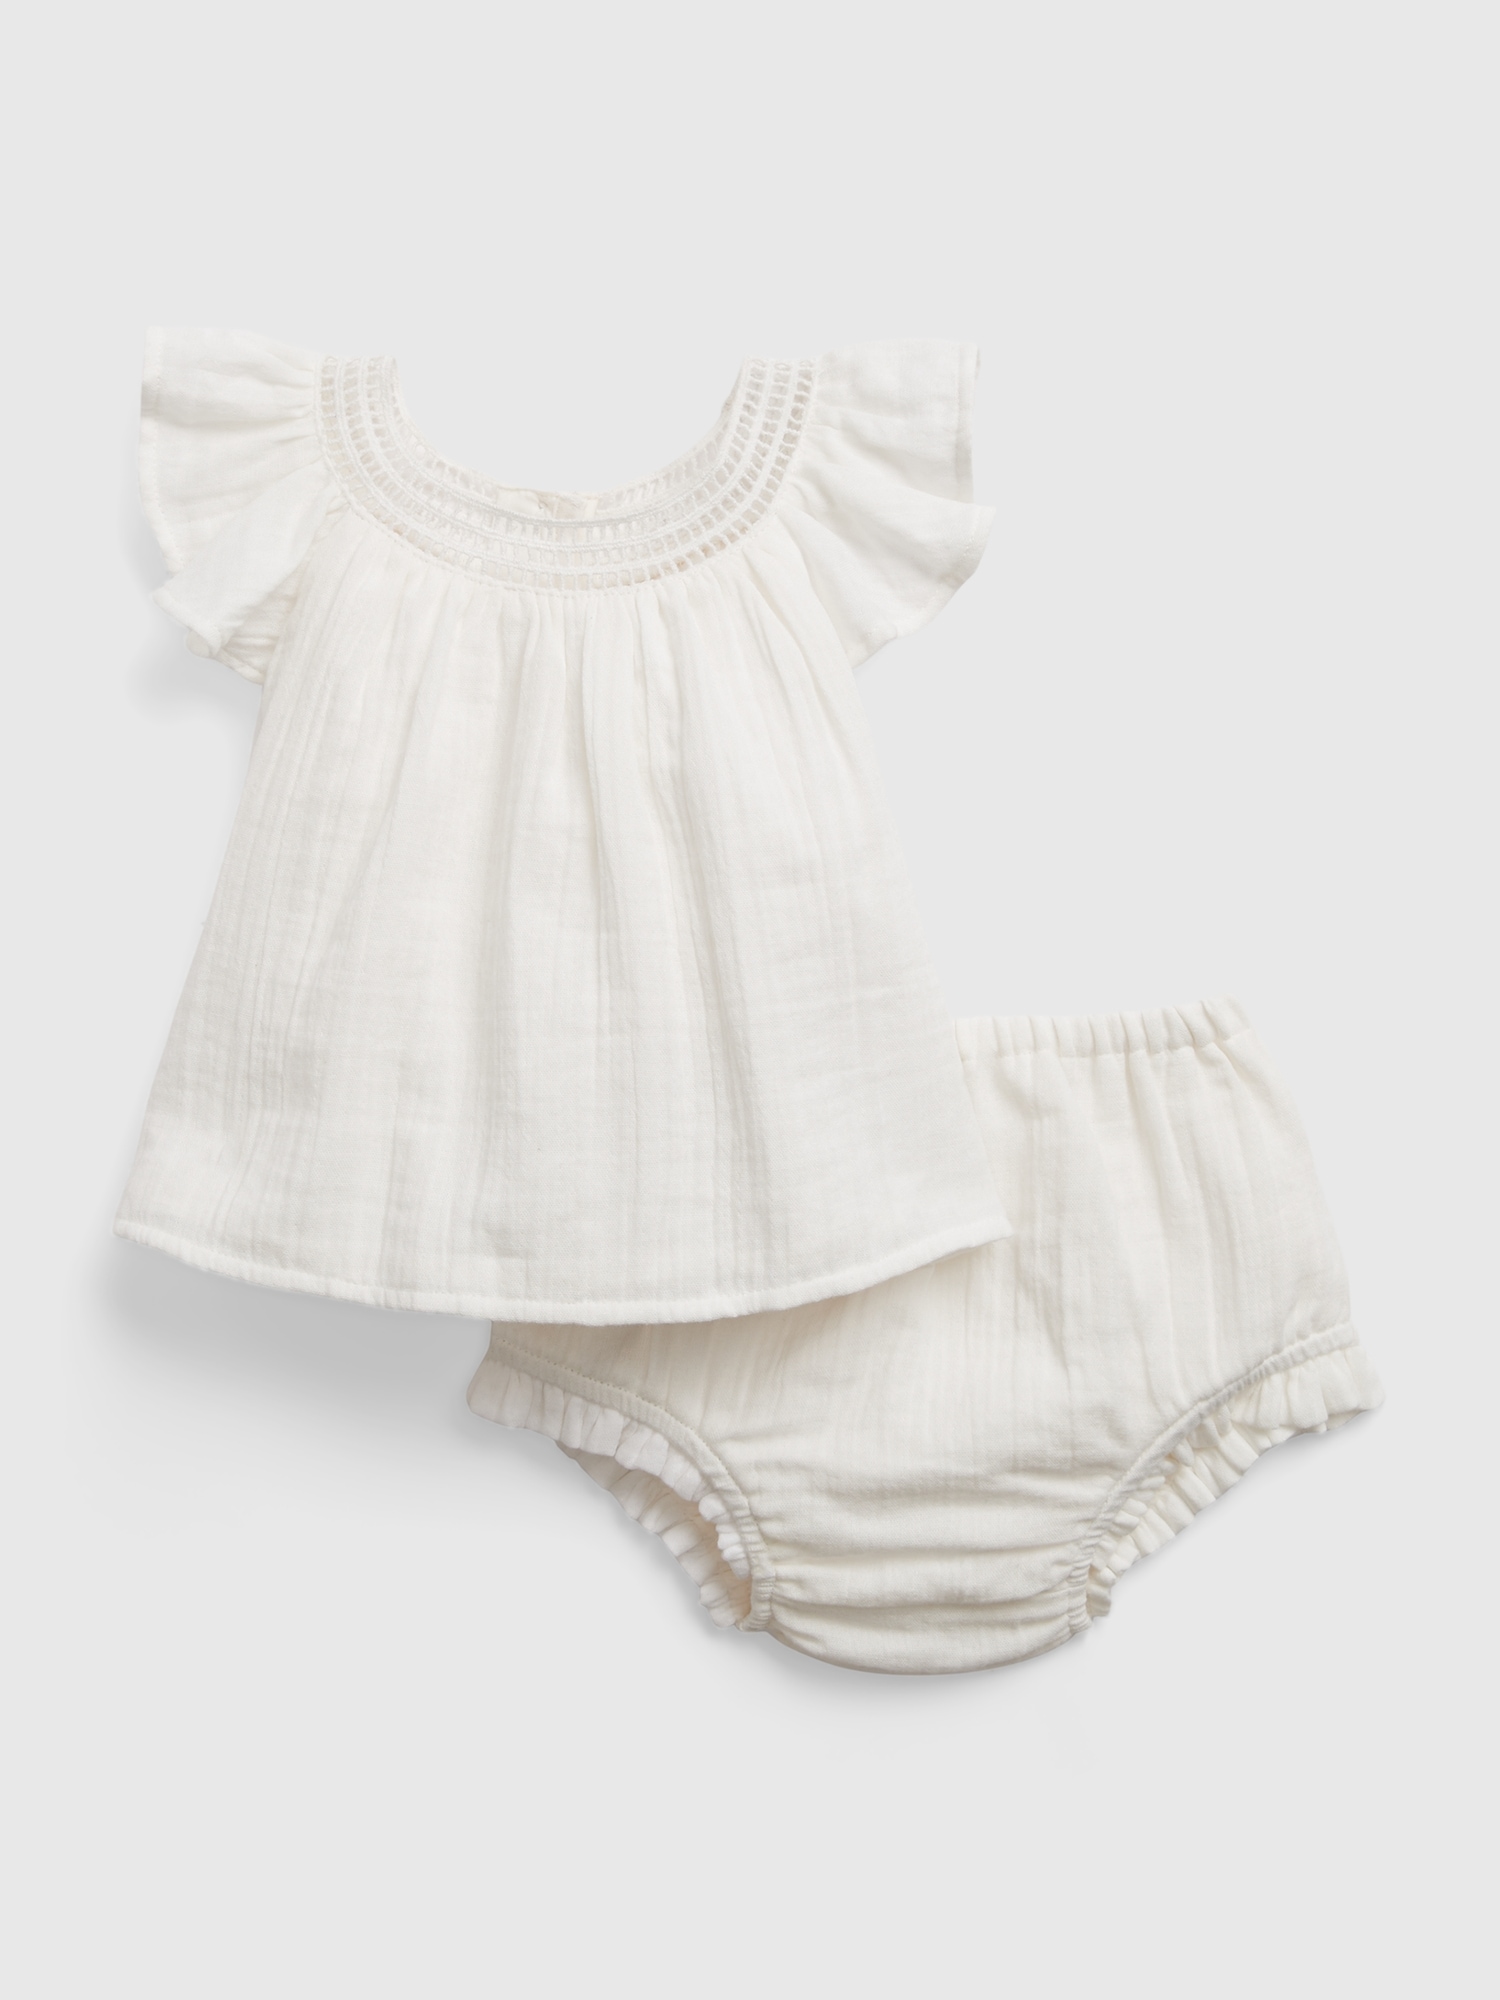 Gap Baby Crinkle Gauze Crochet Outfit Set white. 1